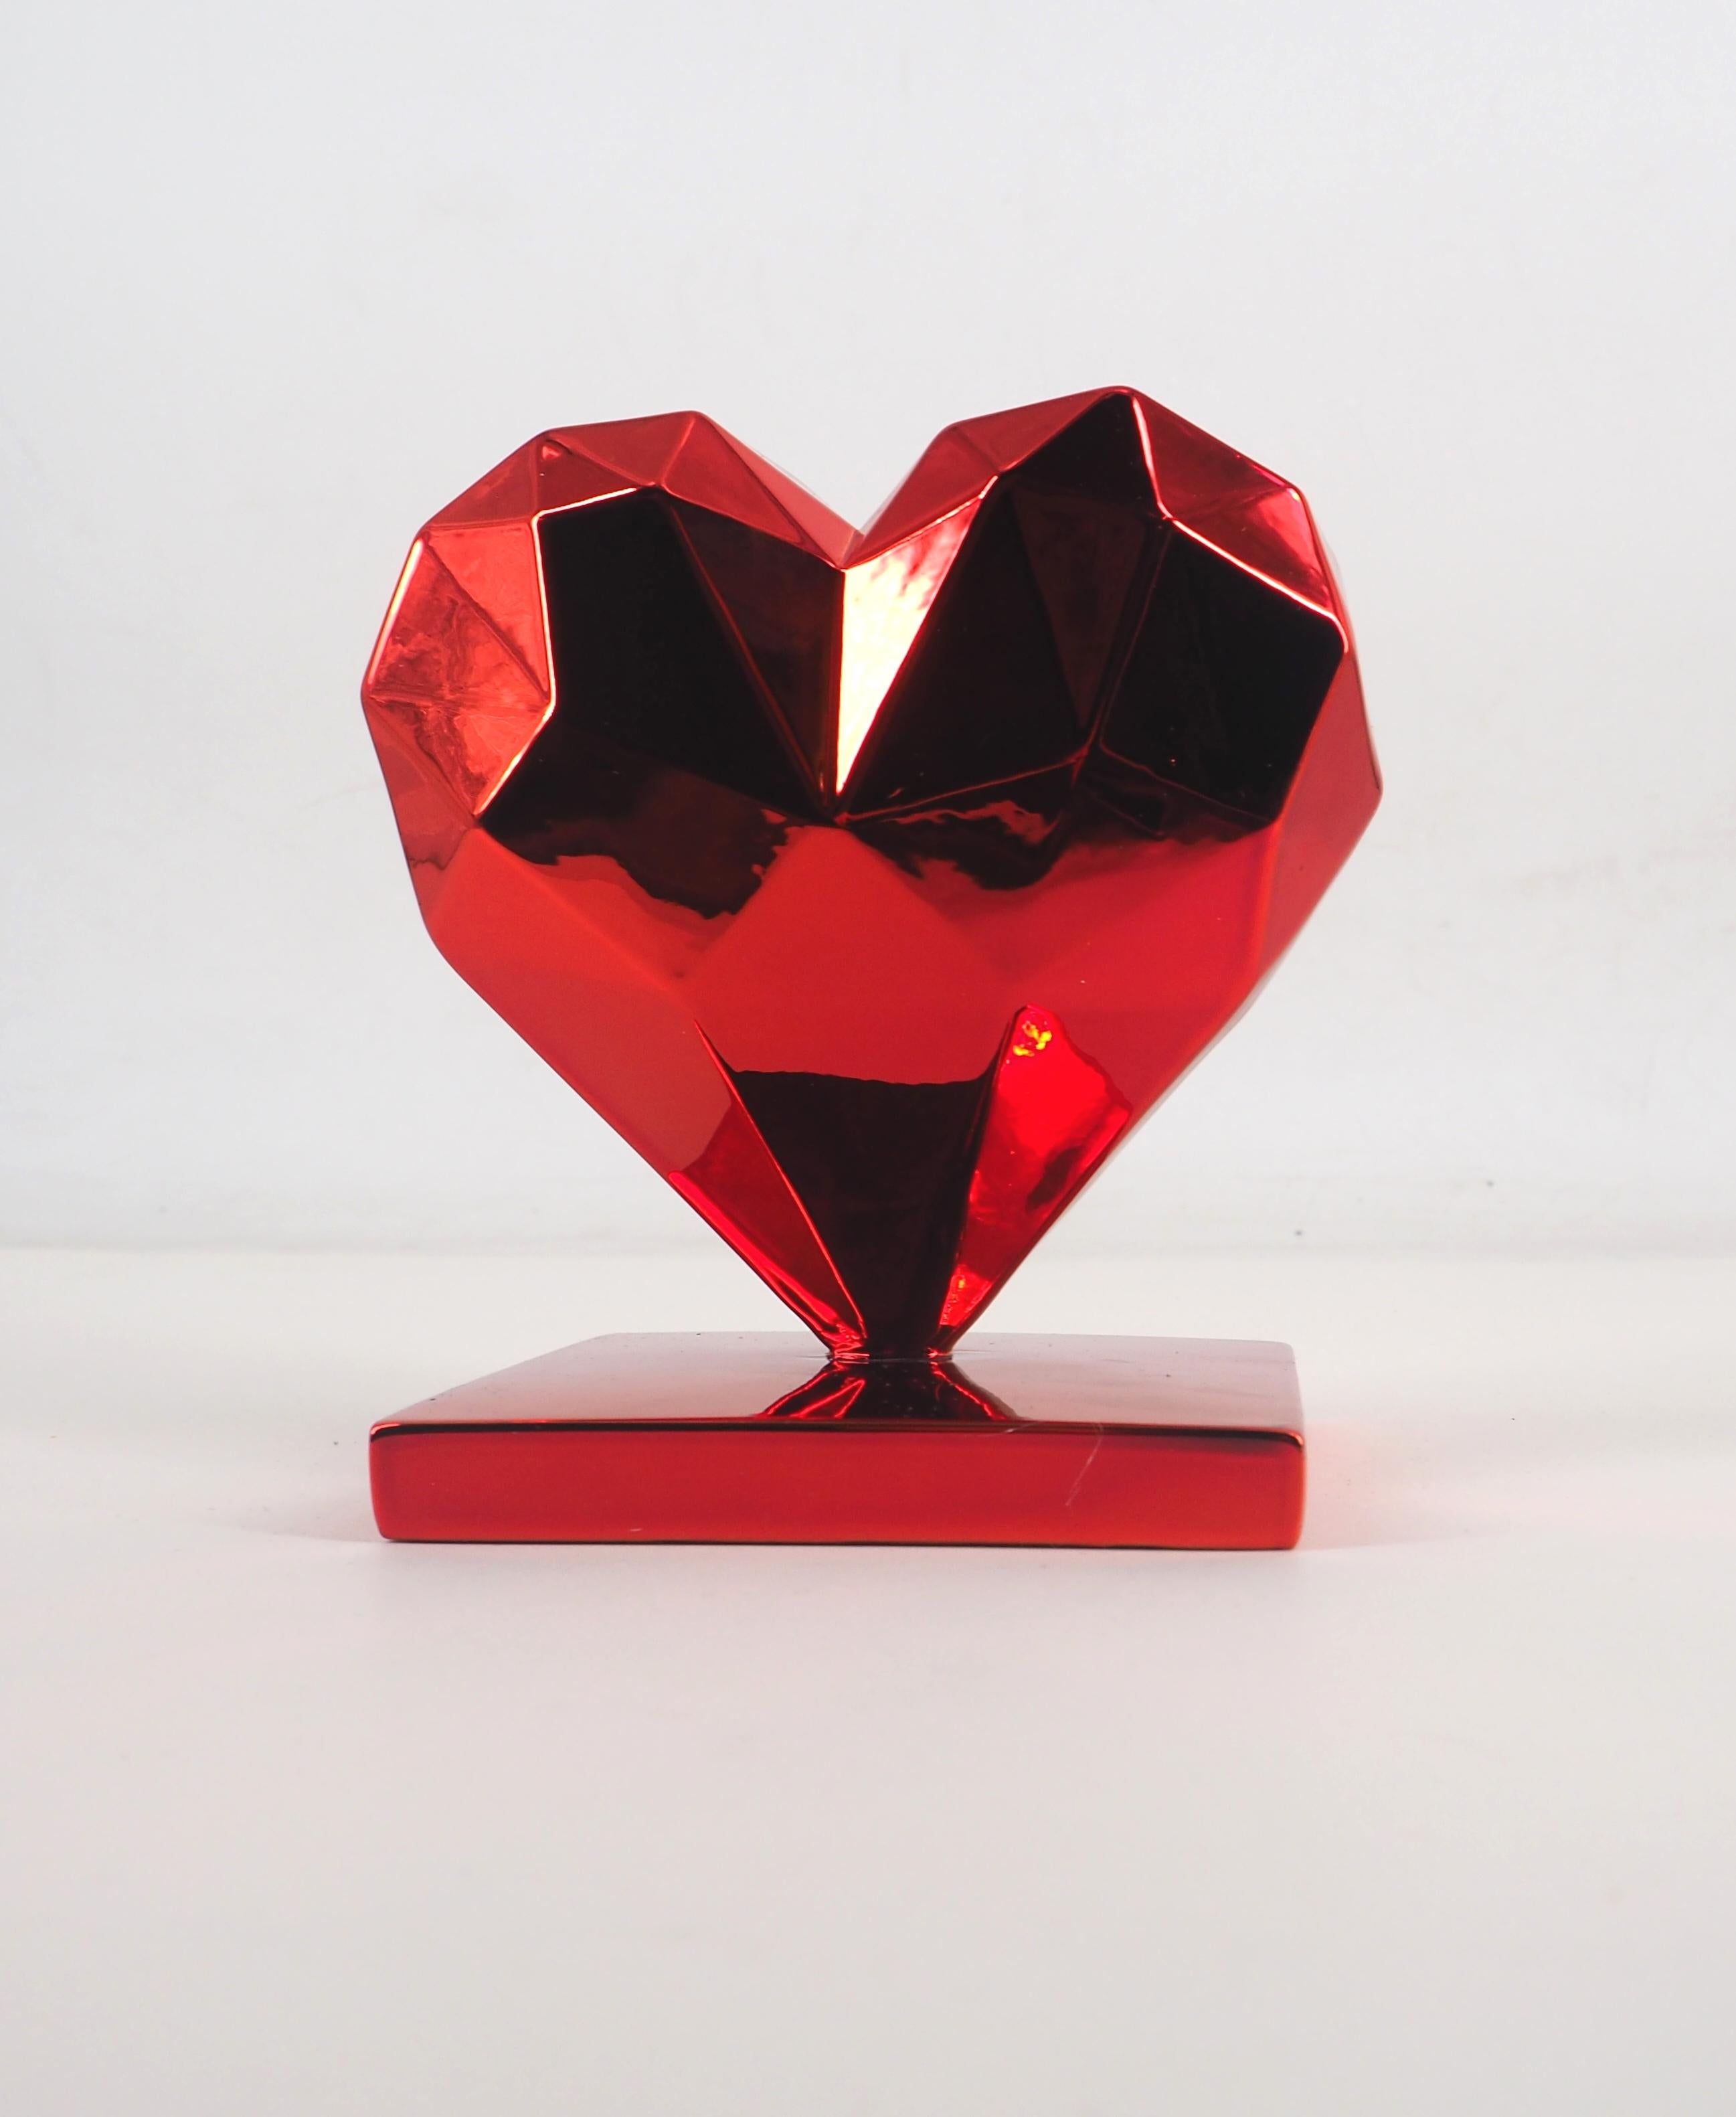 Heart Spirit (édition rouge) - Sculpture dans sa boîte d'origine avec certificat d'artiste